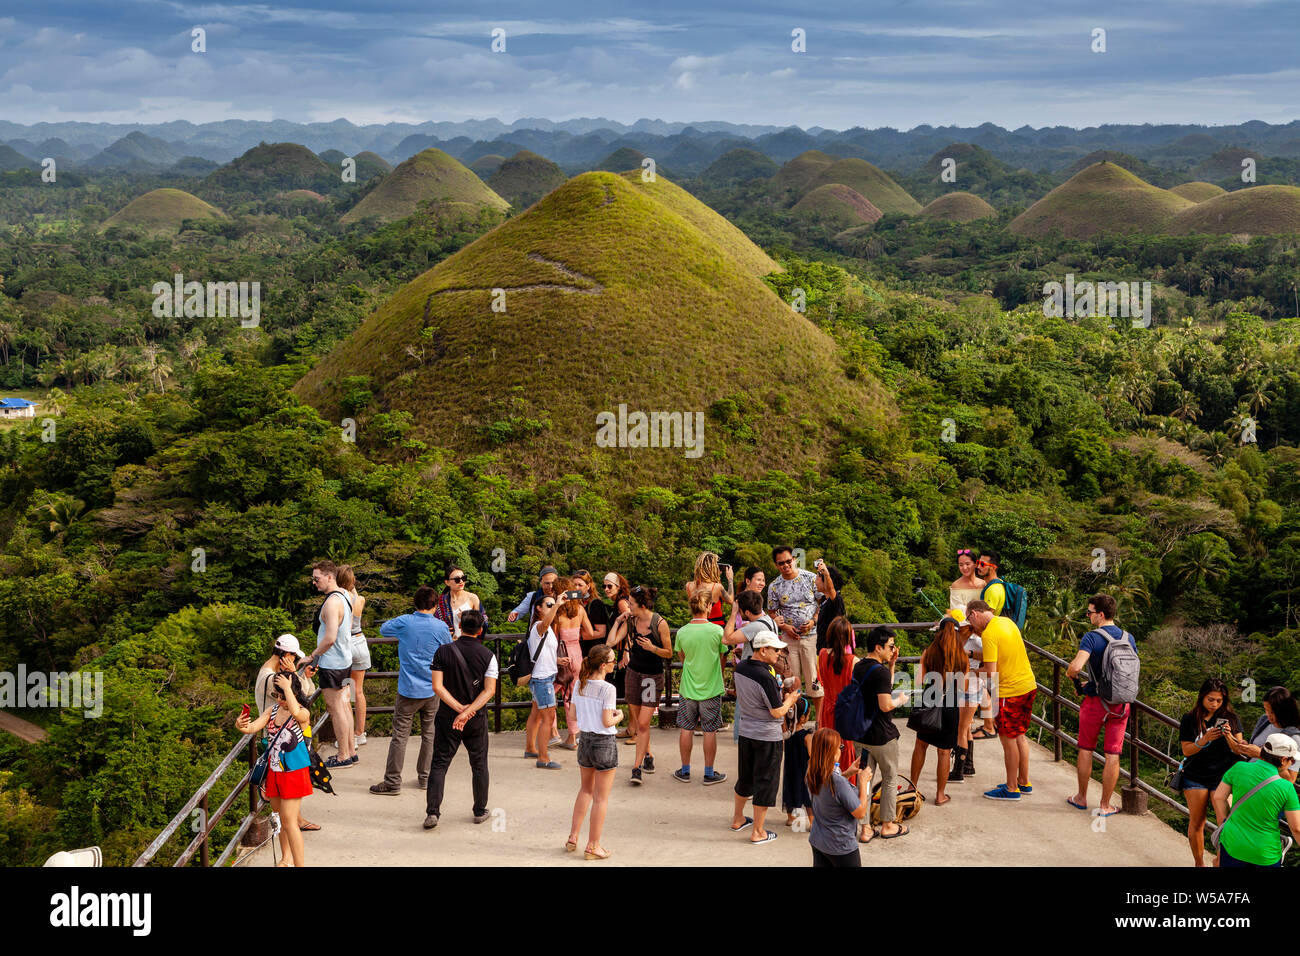 The Chocolate Hills Viewing Platform, Carmen, Bohol, The Philippines Stock Photo